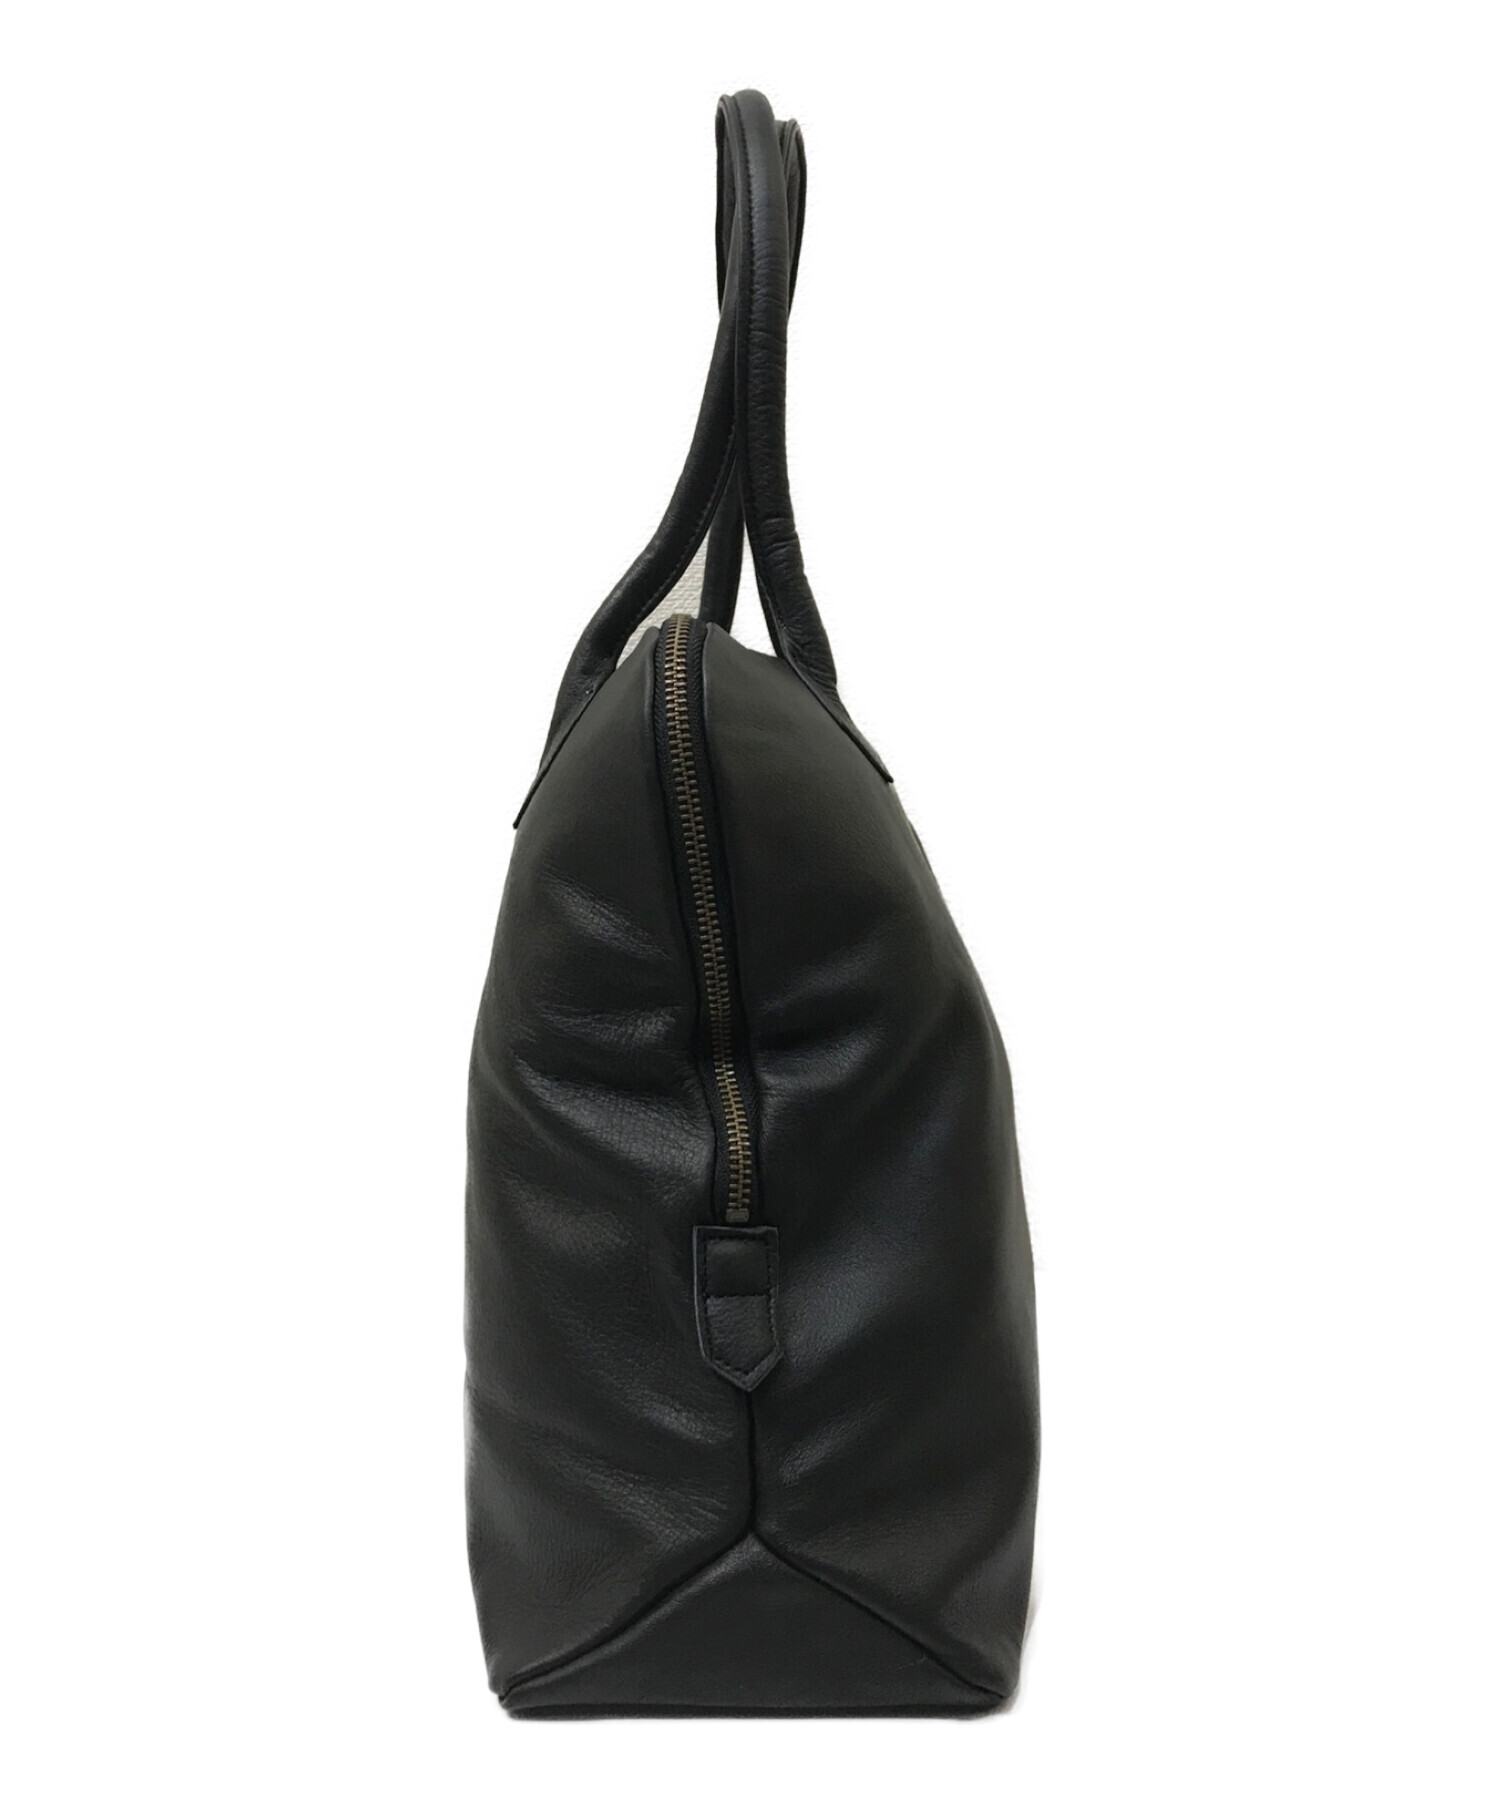 THE FACTORY (ザ ファクトリー) Silva Tote Bag Leather noir レザートートバッグ ブラック